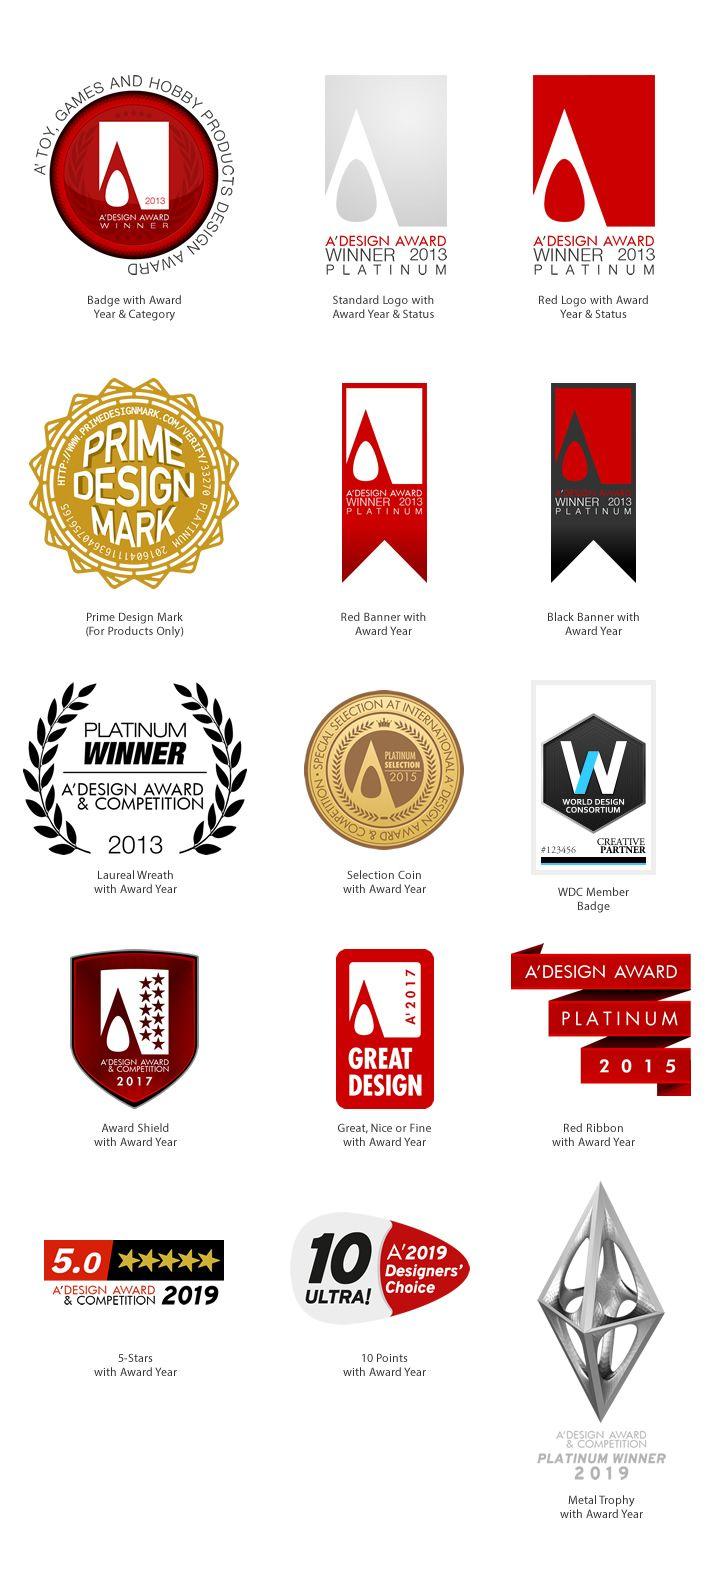 Award Logo - A' Design Award and Competition - Award Logo and Badges